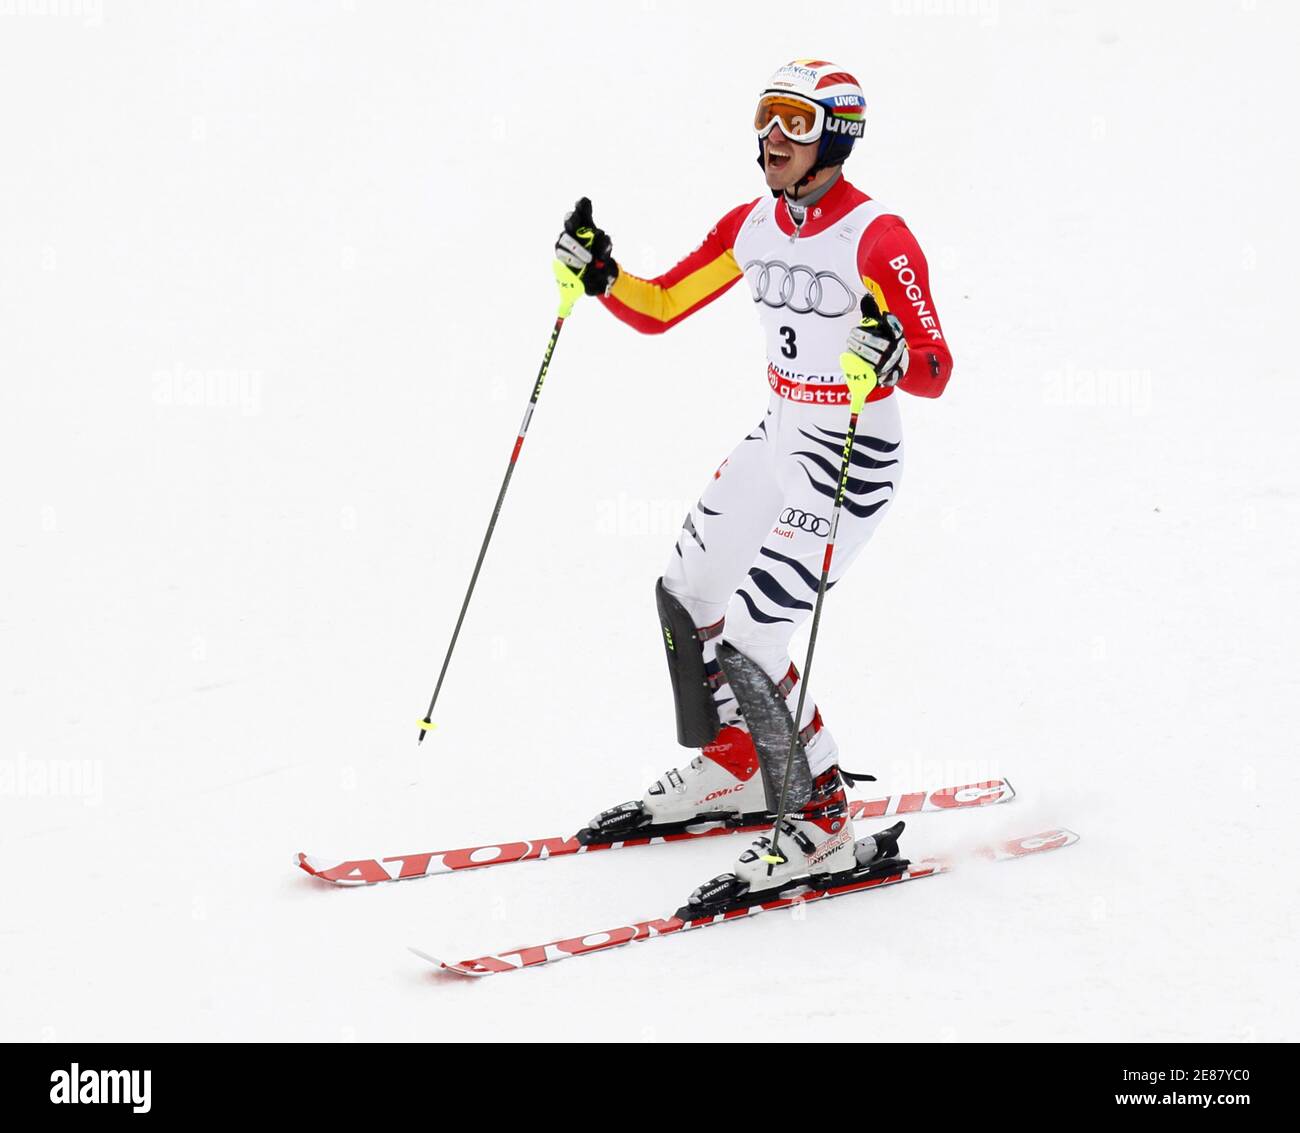 Felix Neureuther of Germany celebrates winning the men's Alpine Skiing World Cup Slalom in Garmisch-Partenkirchen March 13, 2010. REUTERS/Miro Kuzmanovic (GERMANY - Tags: SPORT SKIING) Stock Photo